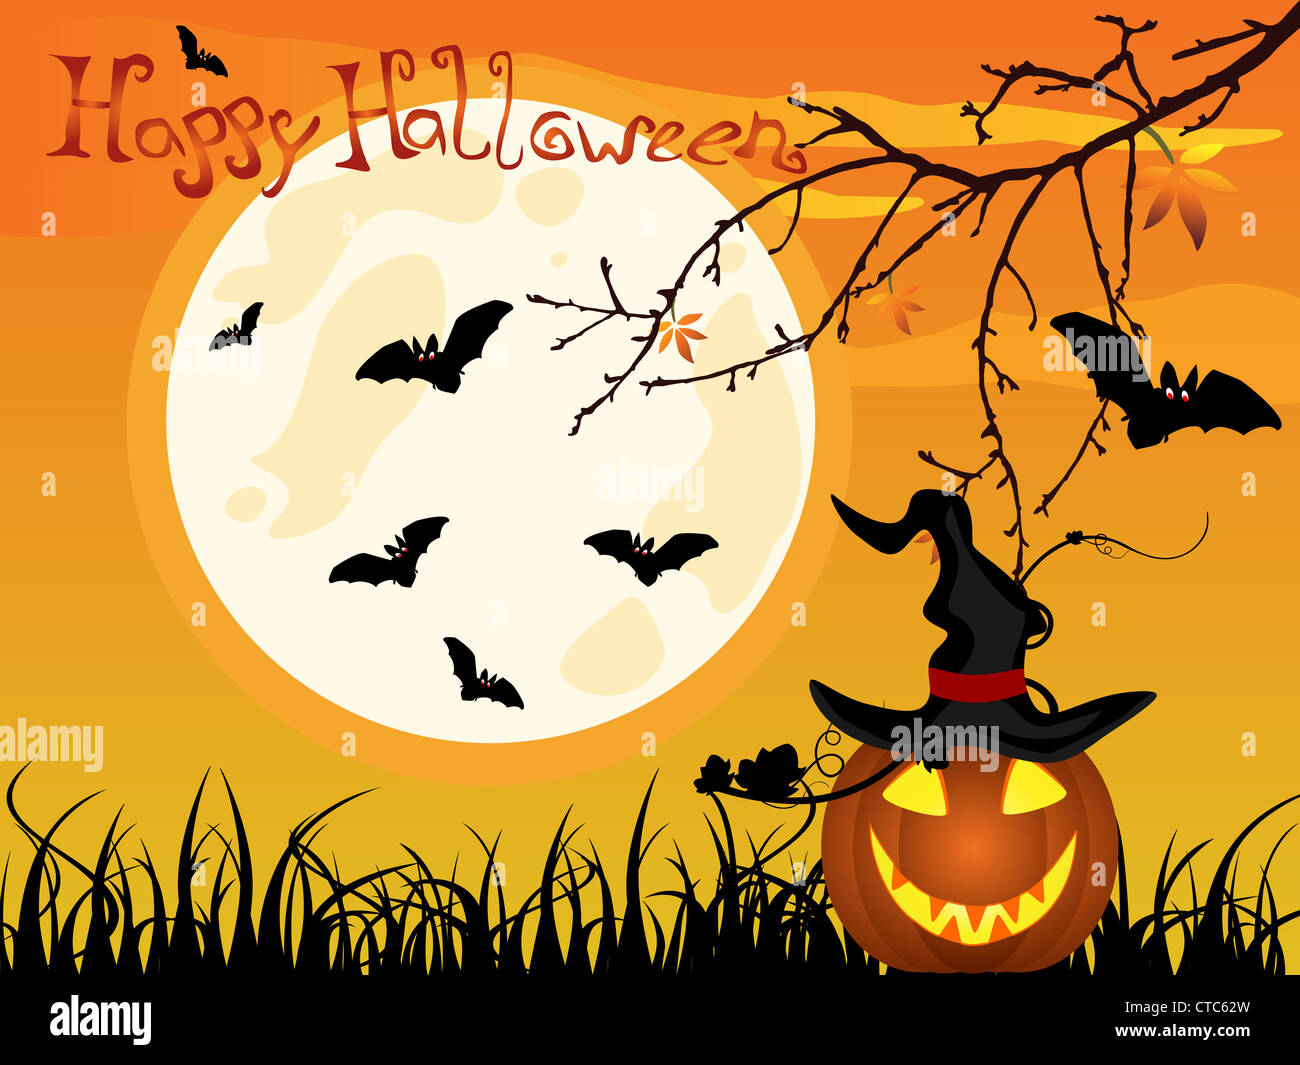 Halloween poster Stock Photo